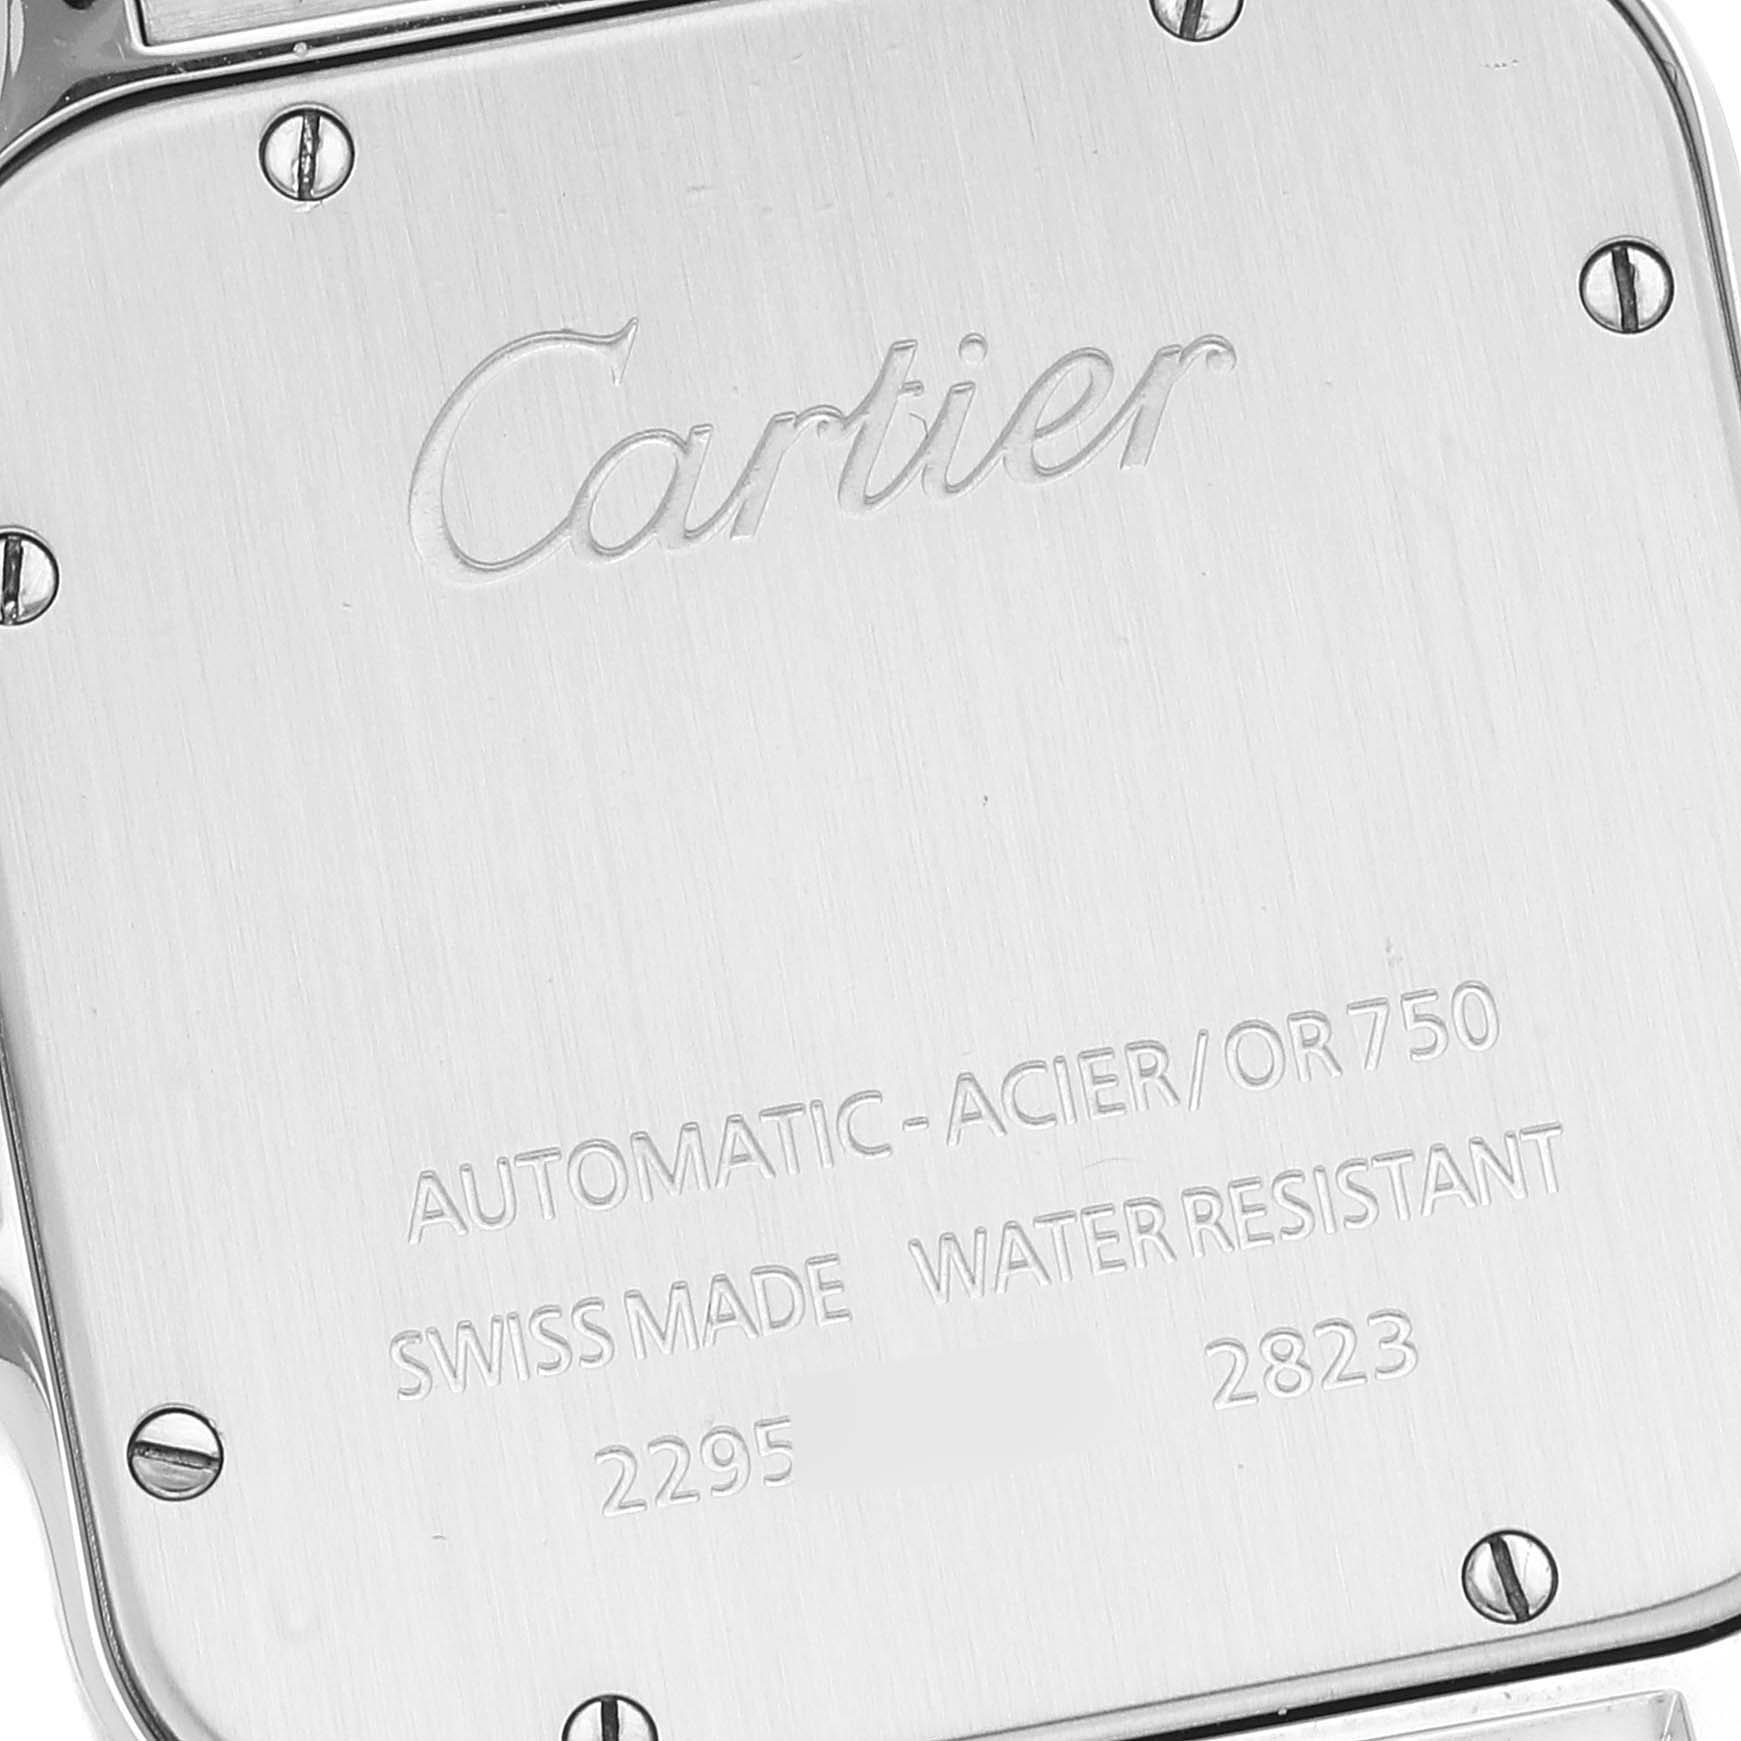 Cartier Santos Galbee XL Steel Yellow Gold Mens Watch W20099C4 ...